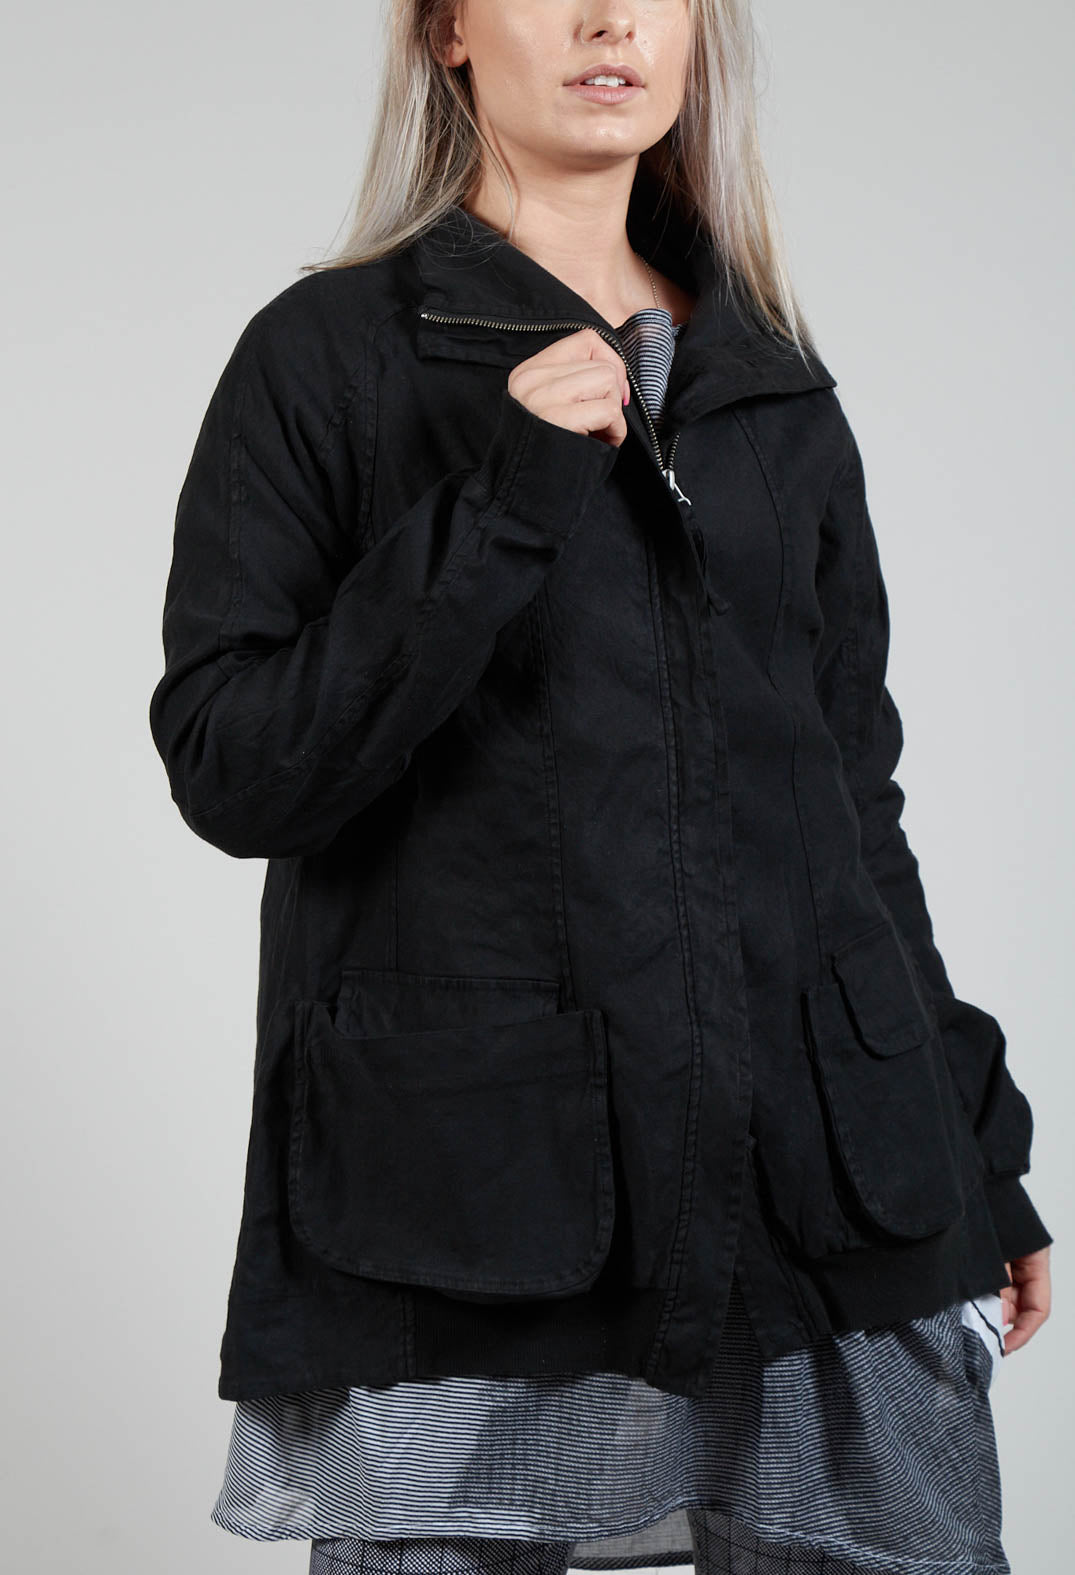 Cargo Style Jacket in Black